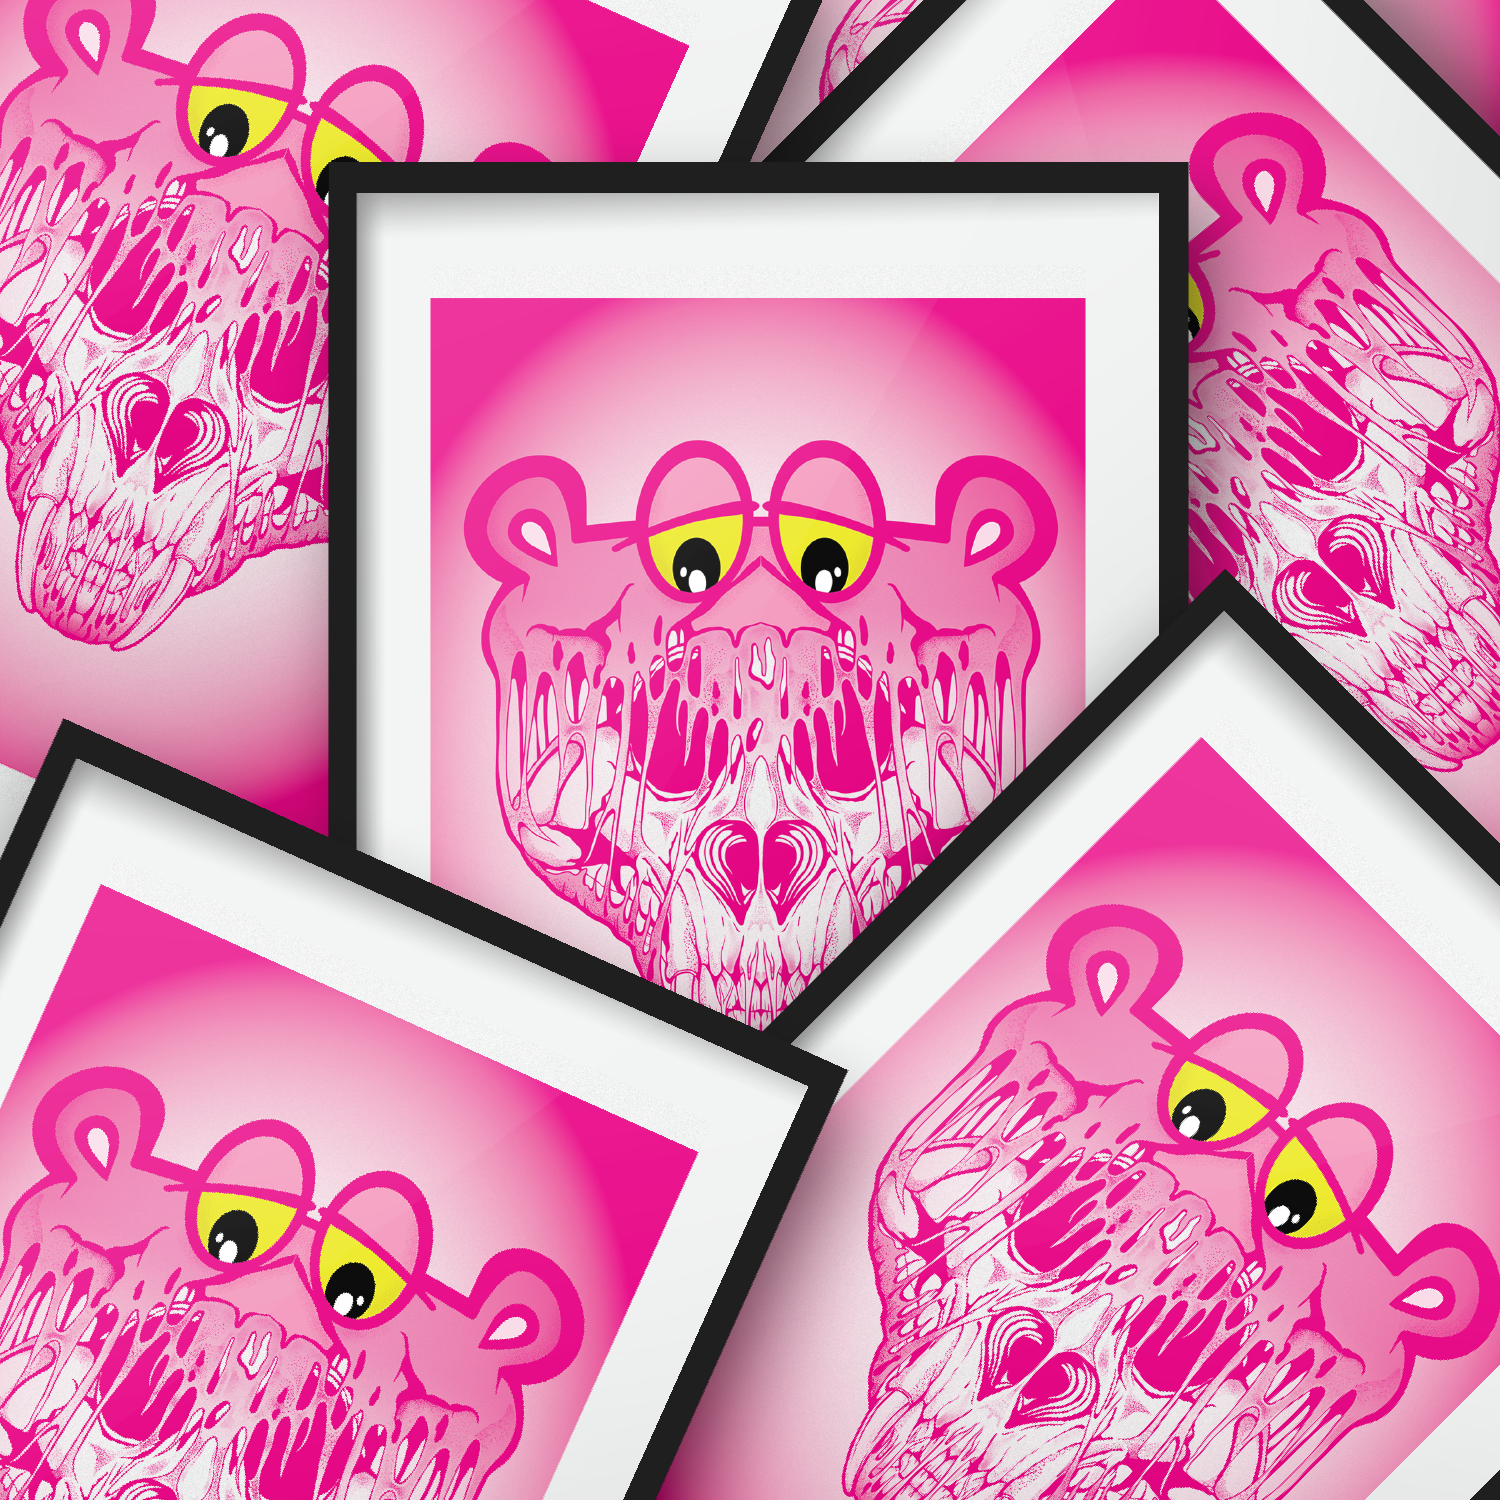 Pink Panther Pop Surrealism art print — Nope - No Ordinary People Exist